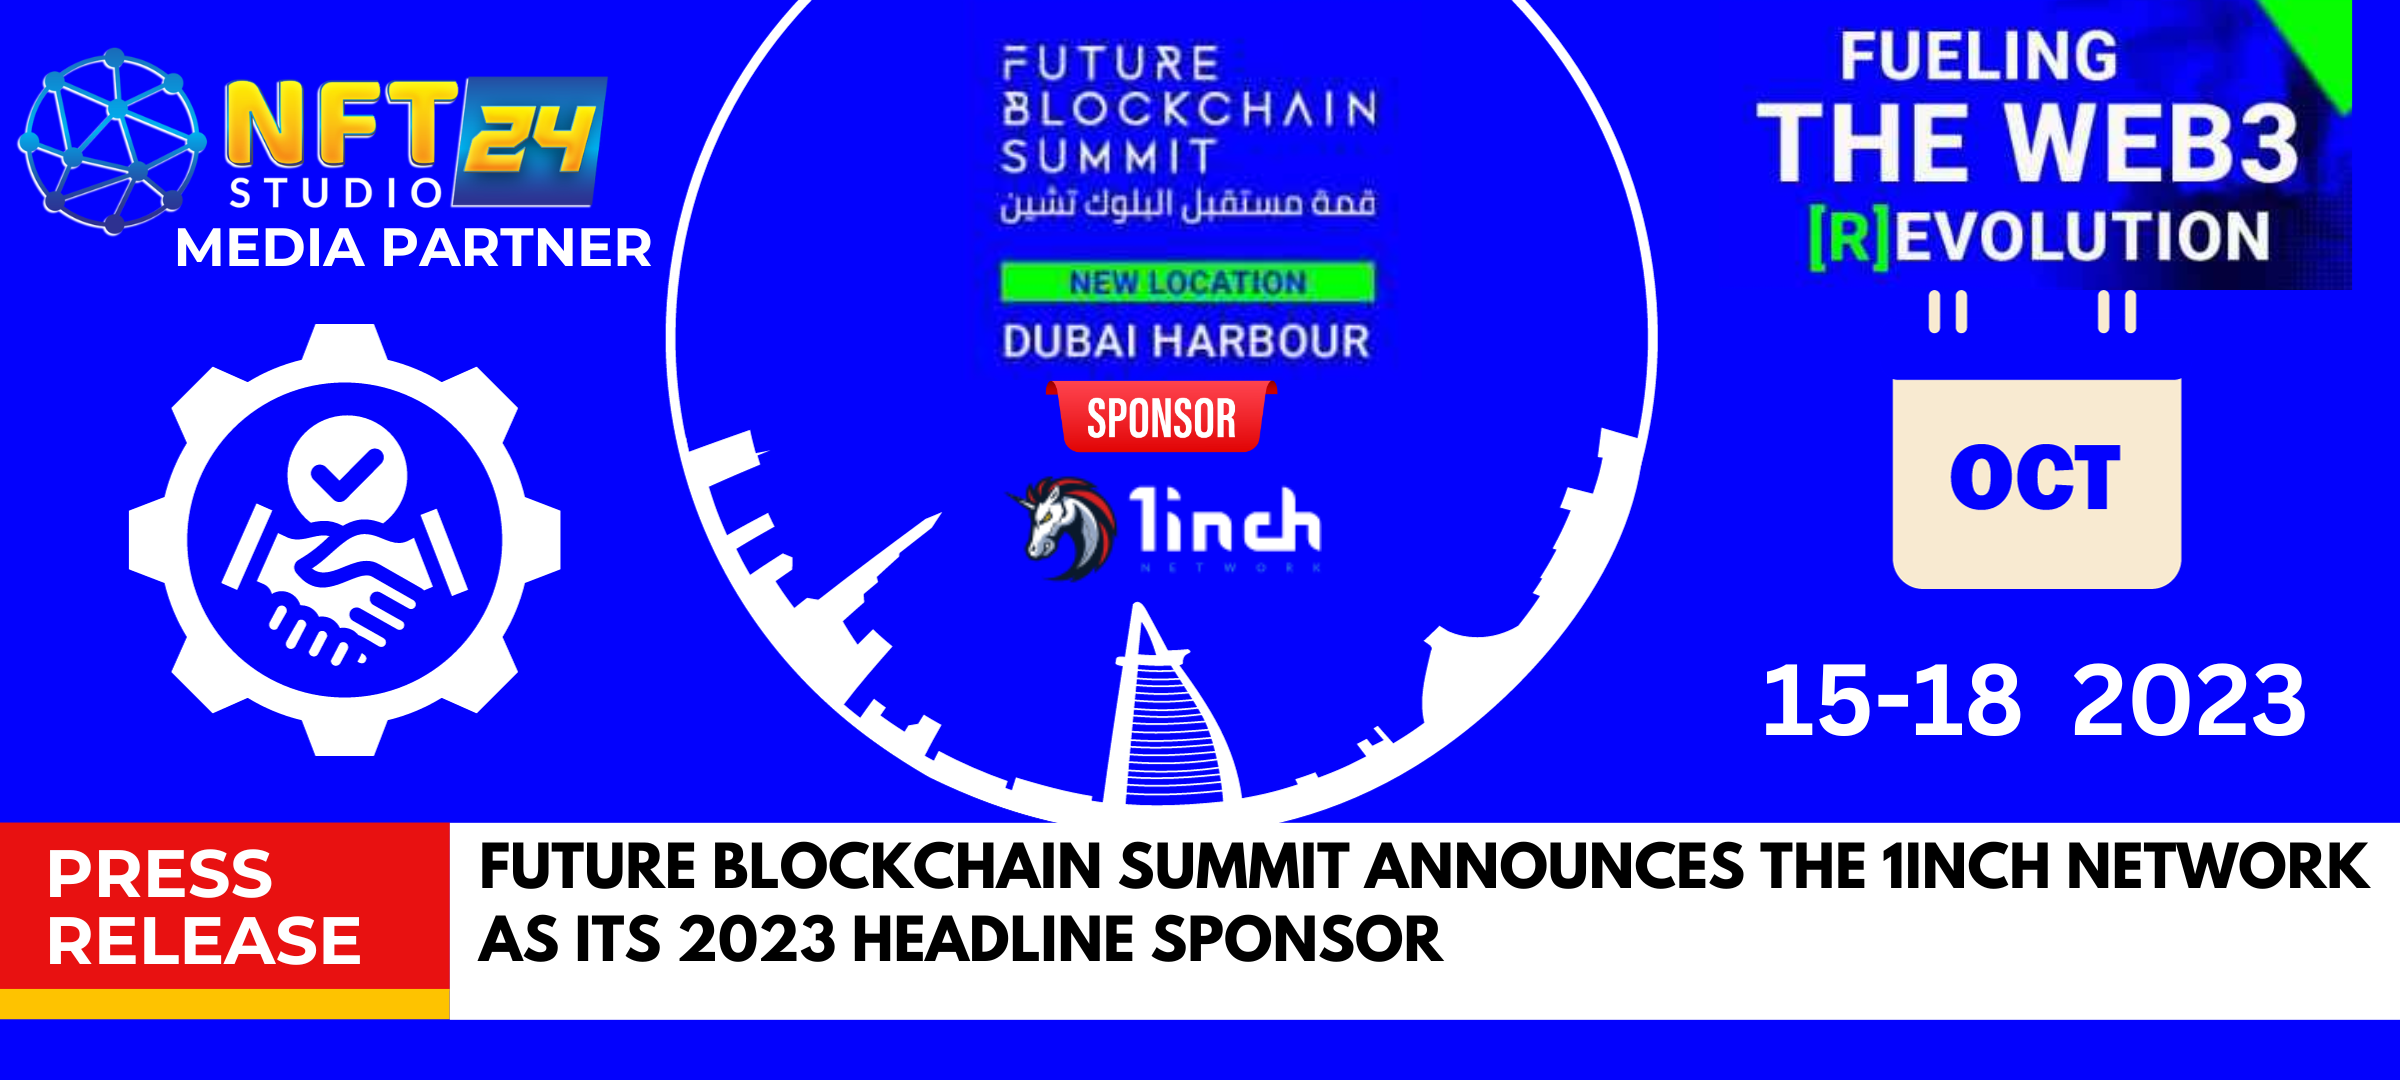 Future Blockchain Summit Announces the 1inch Network as its 2023 Headline Sponsor